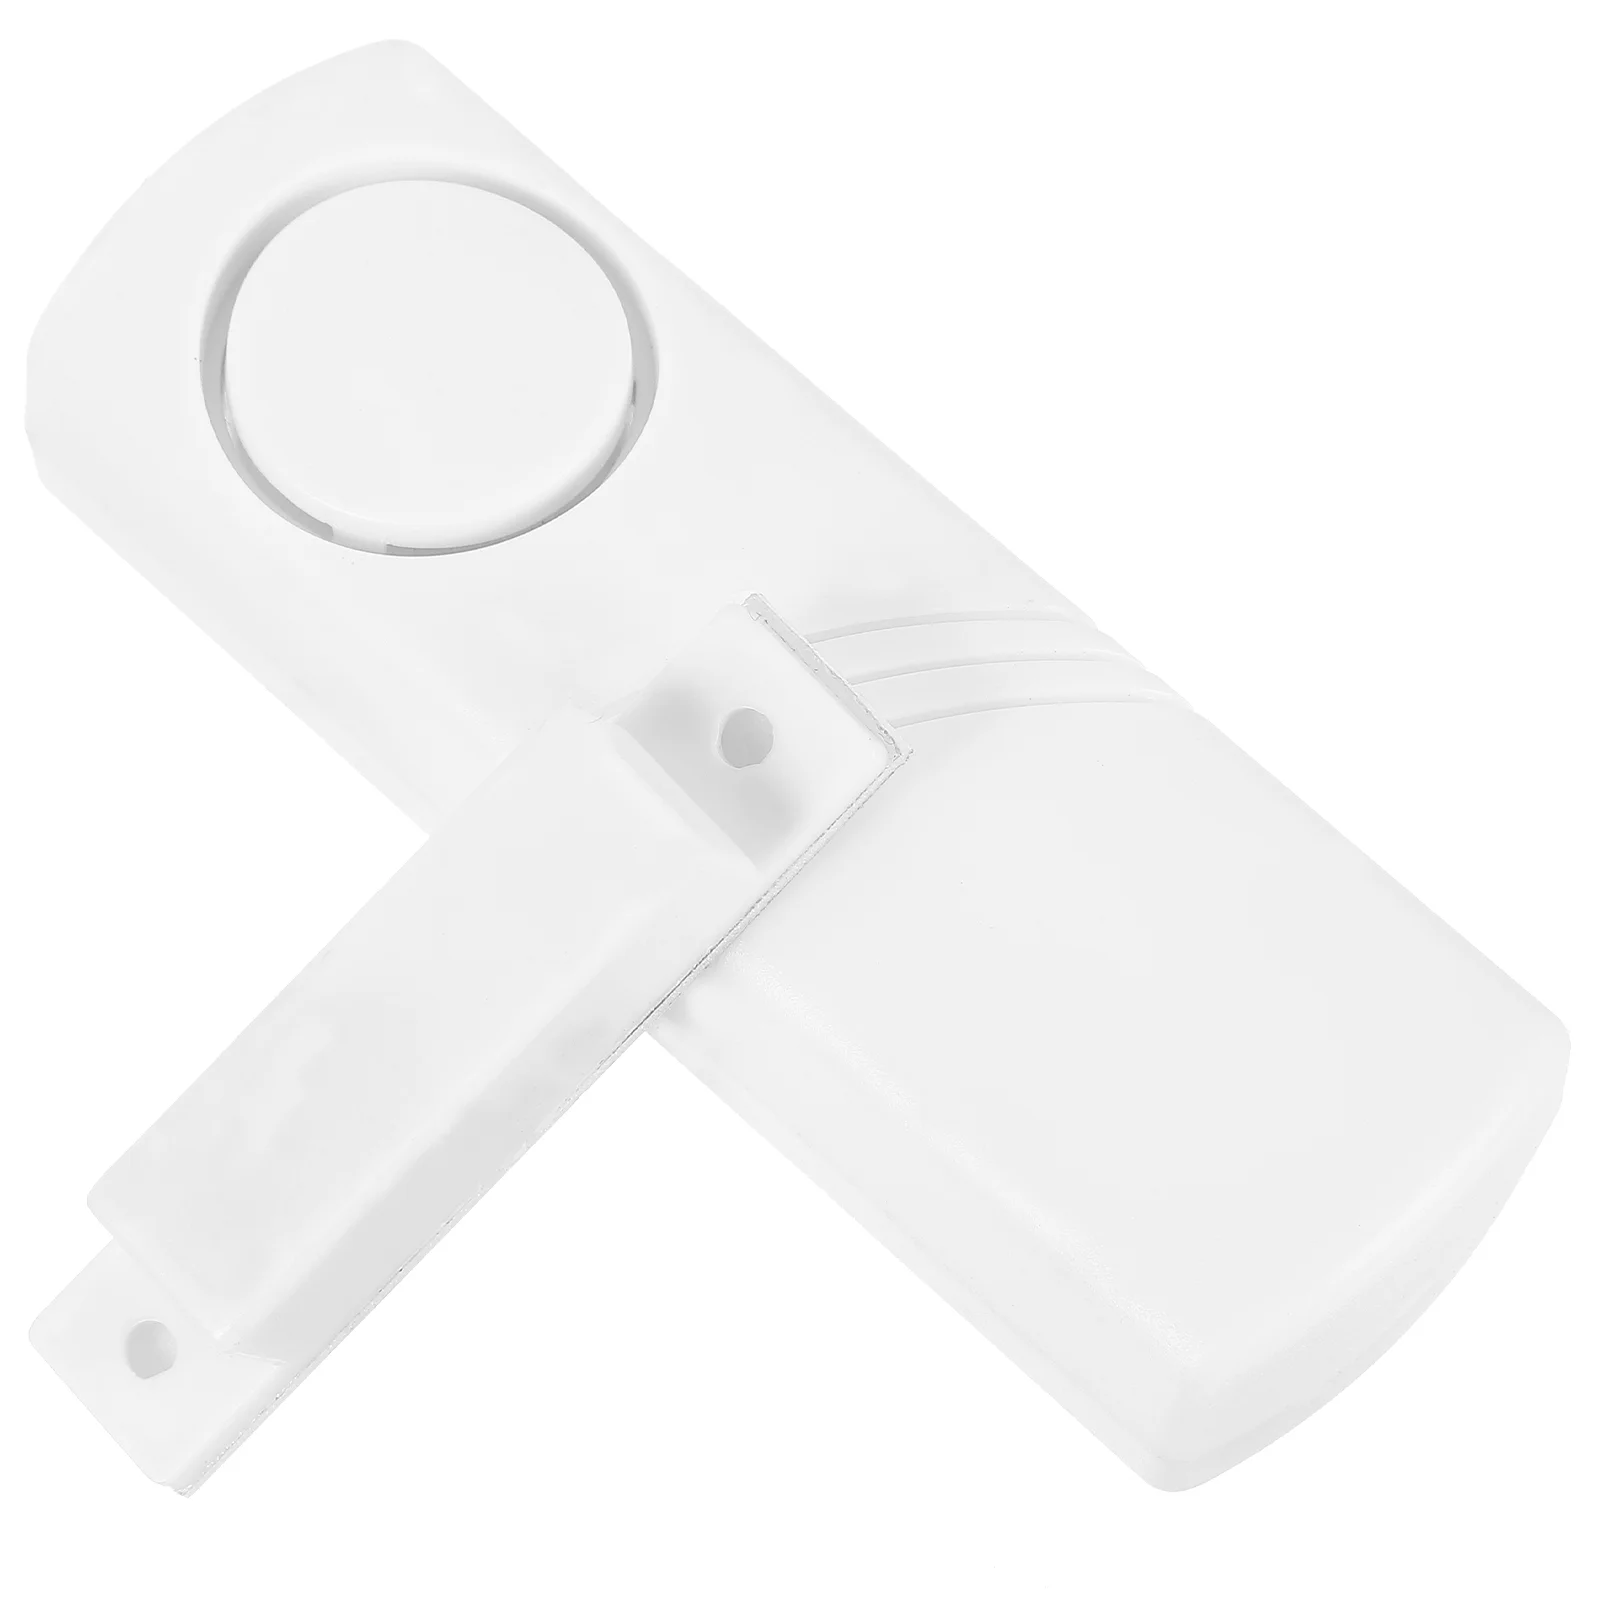 Home Driveway Motion Sensorsss Alert Alarm System Door Window Chime Security Motion Sensorsss ( White)